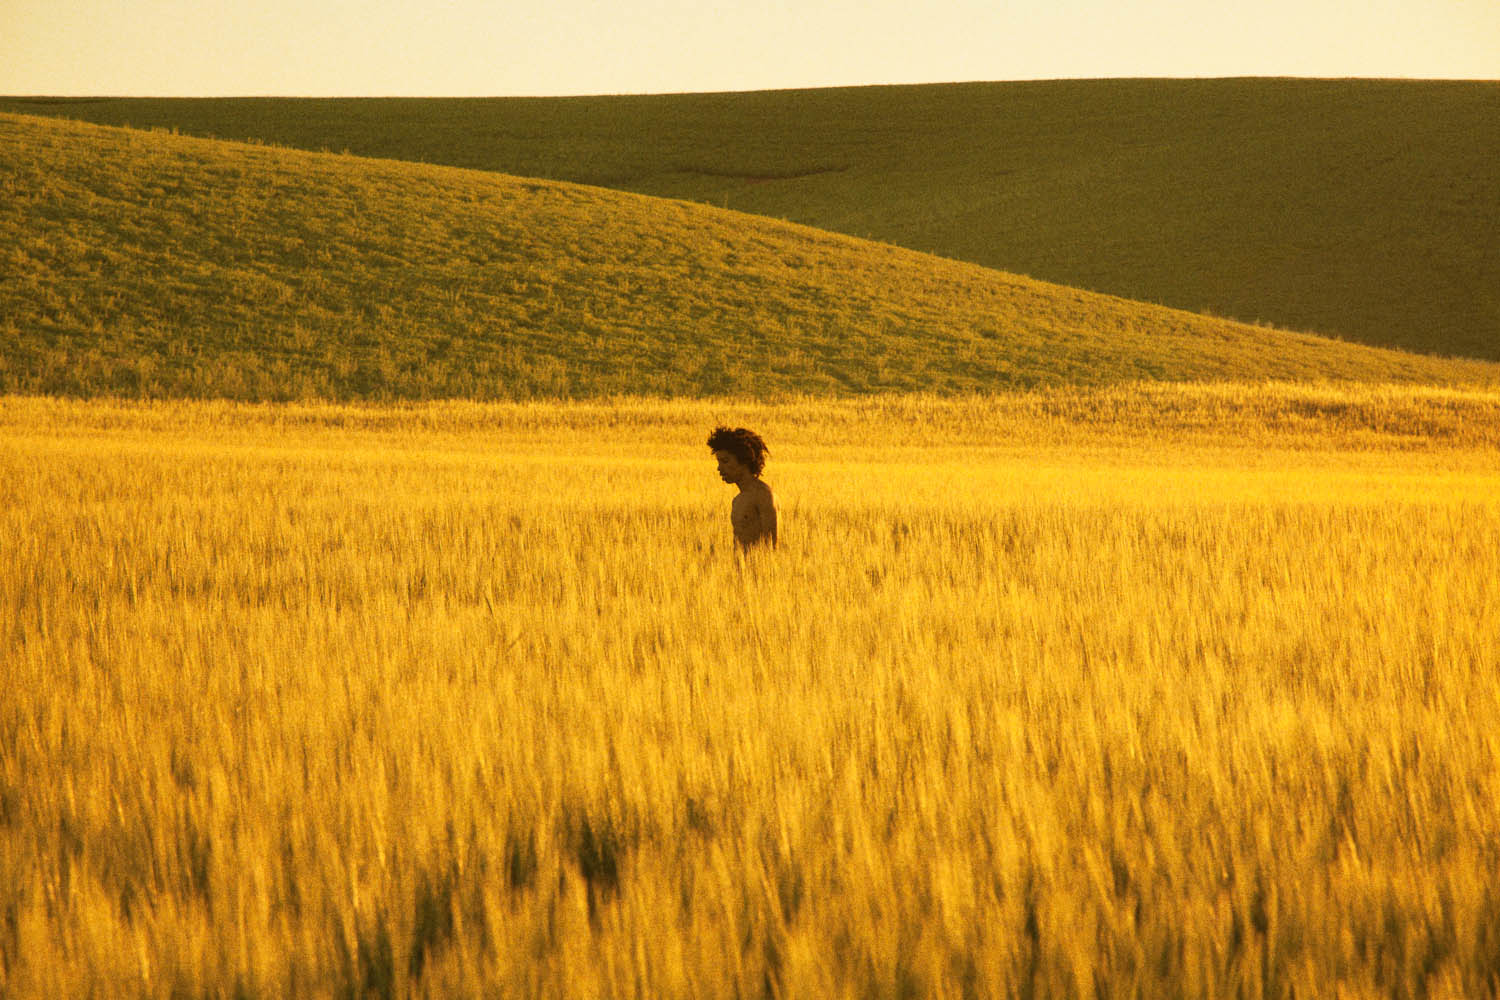    Golden Grassland,  2013  